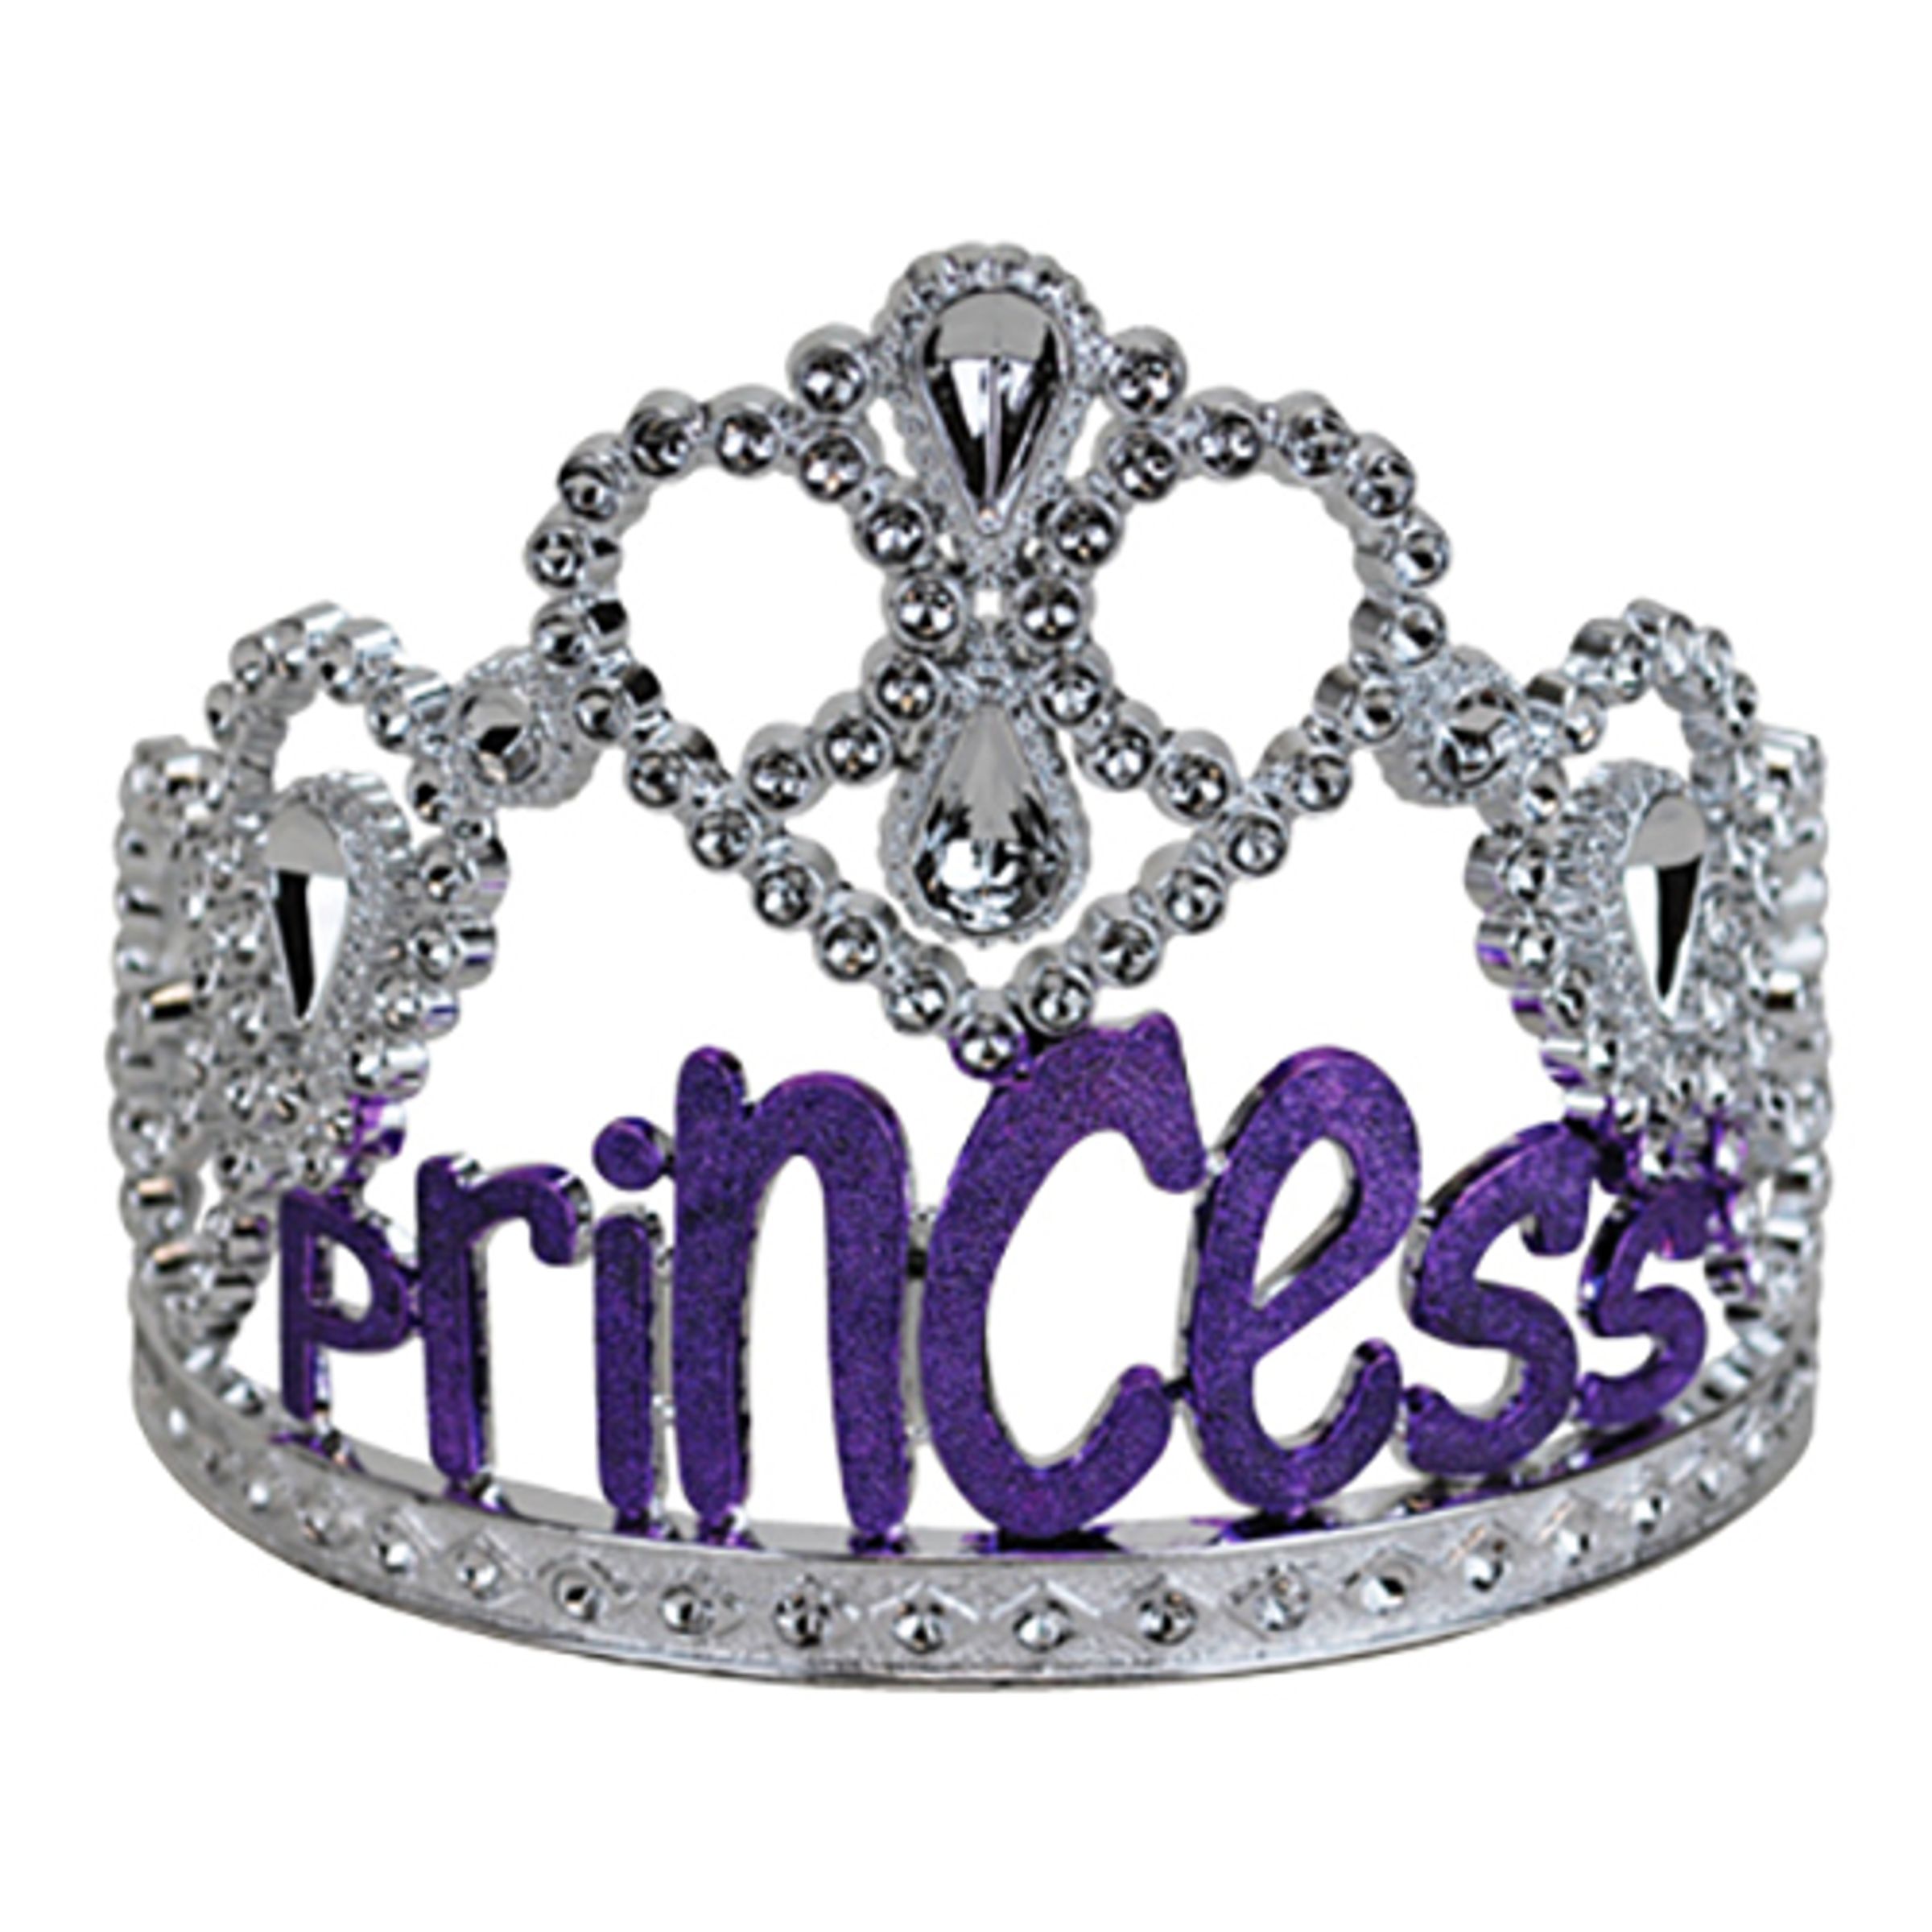 Tiara Birthday Princess - One size